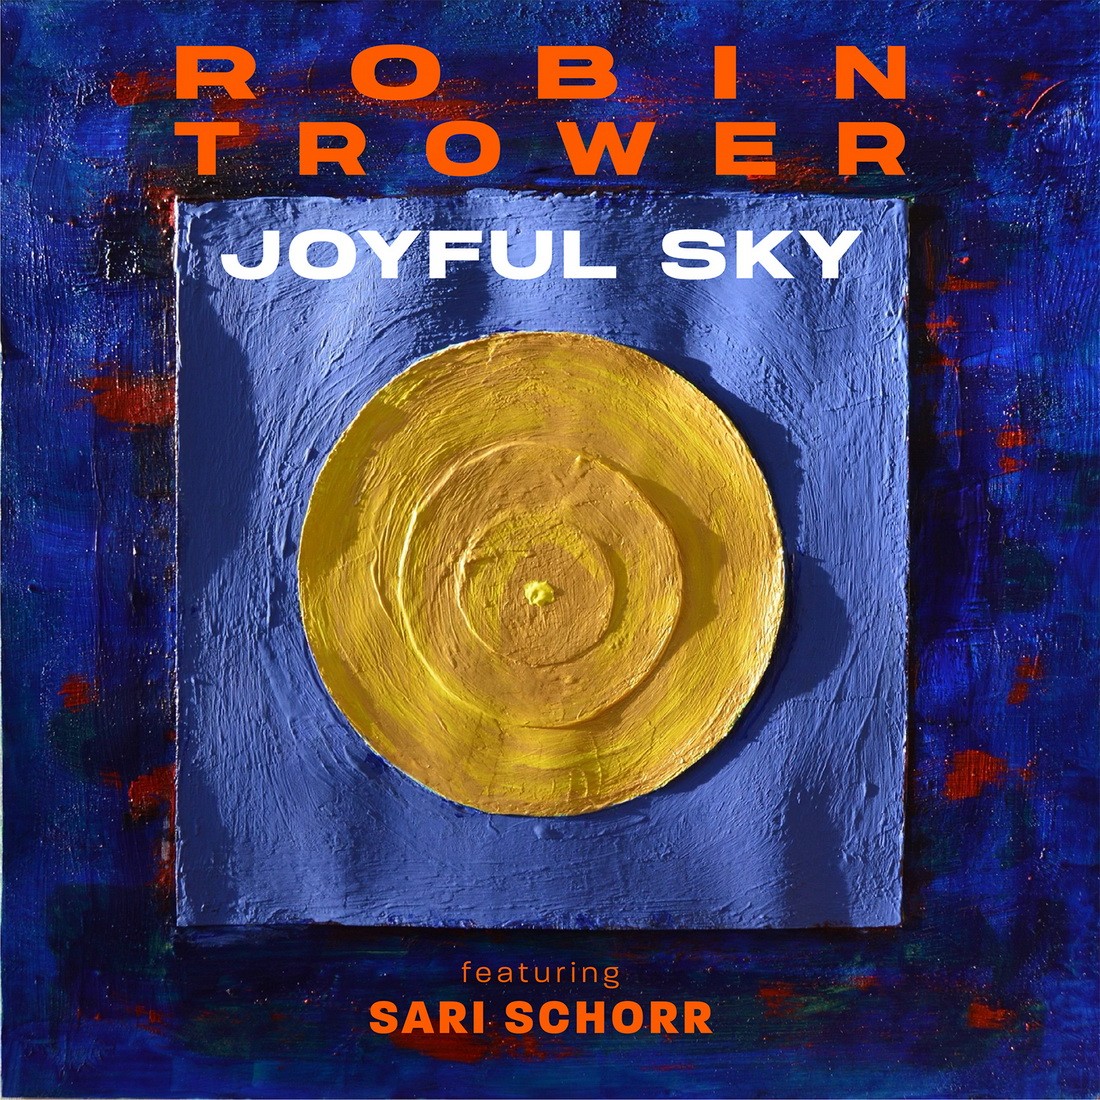 Robin Trower - Joyful Sky (Featuring Sari Schorr)